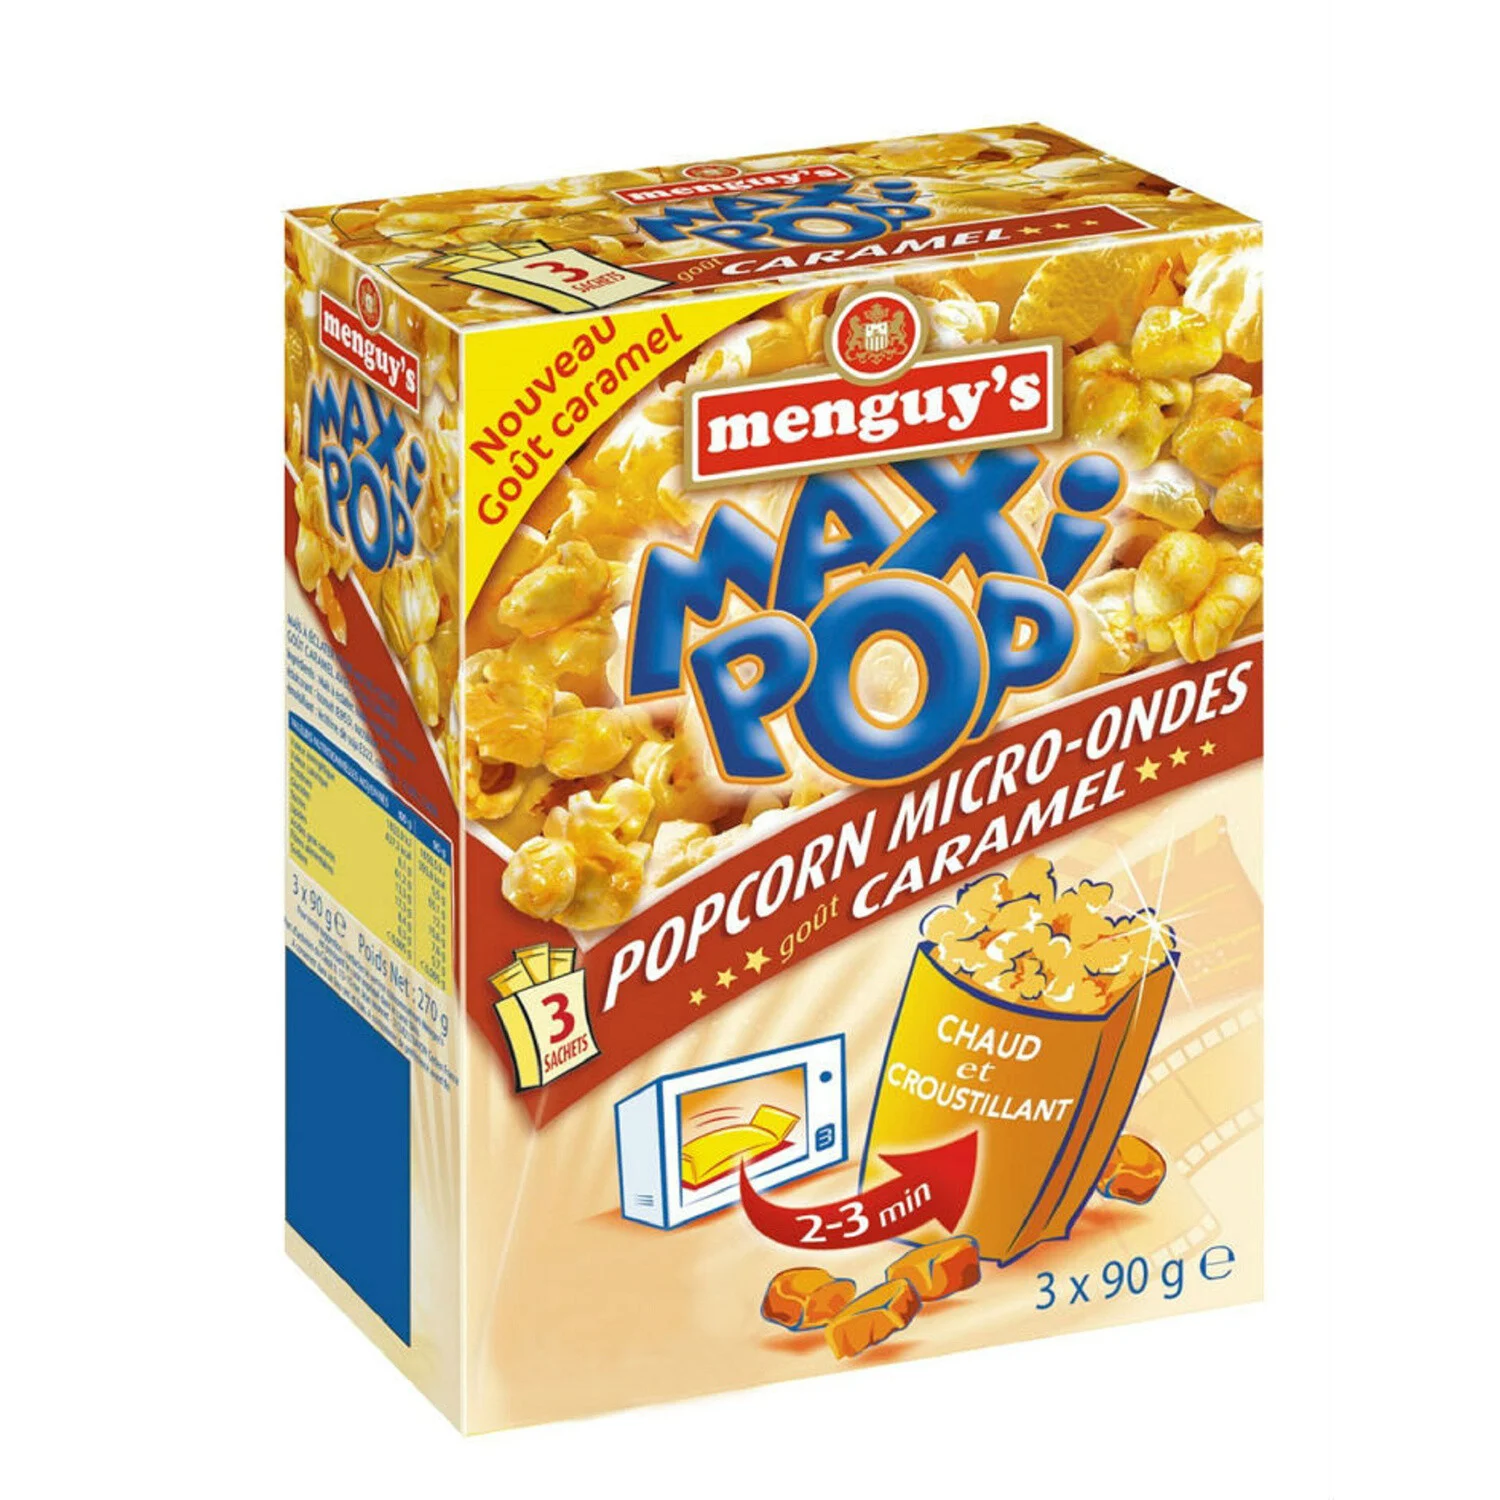 Pop Corn Micro-ondes Goût Caramel 3x90g - Menguy's